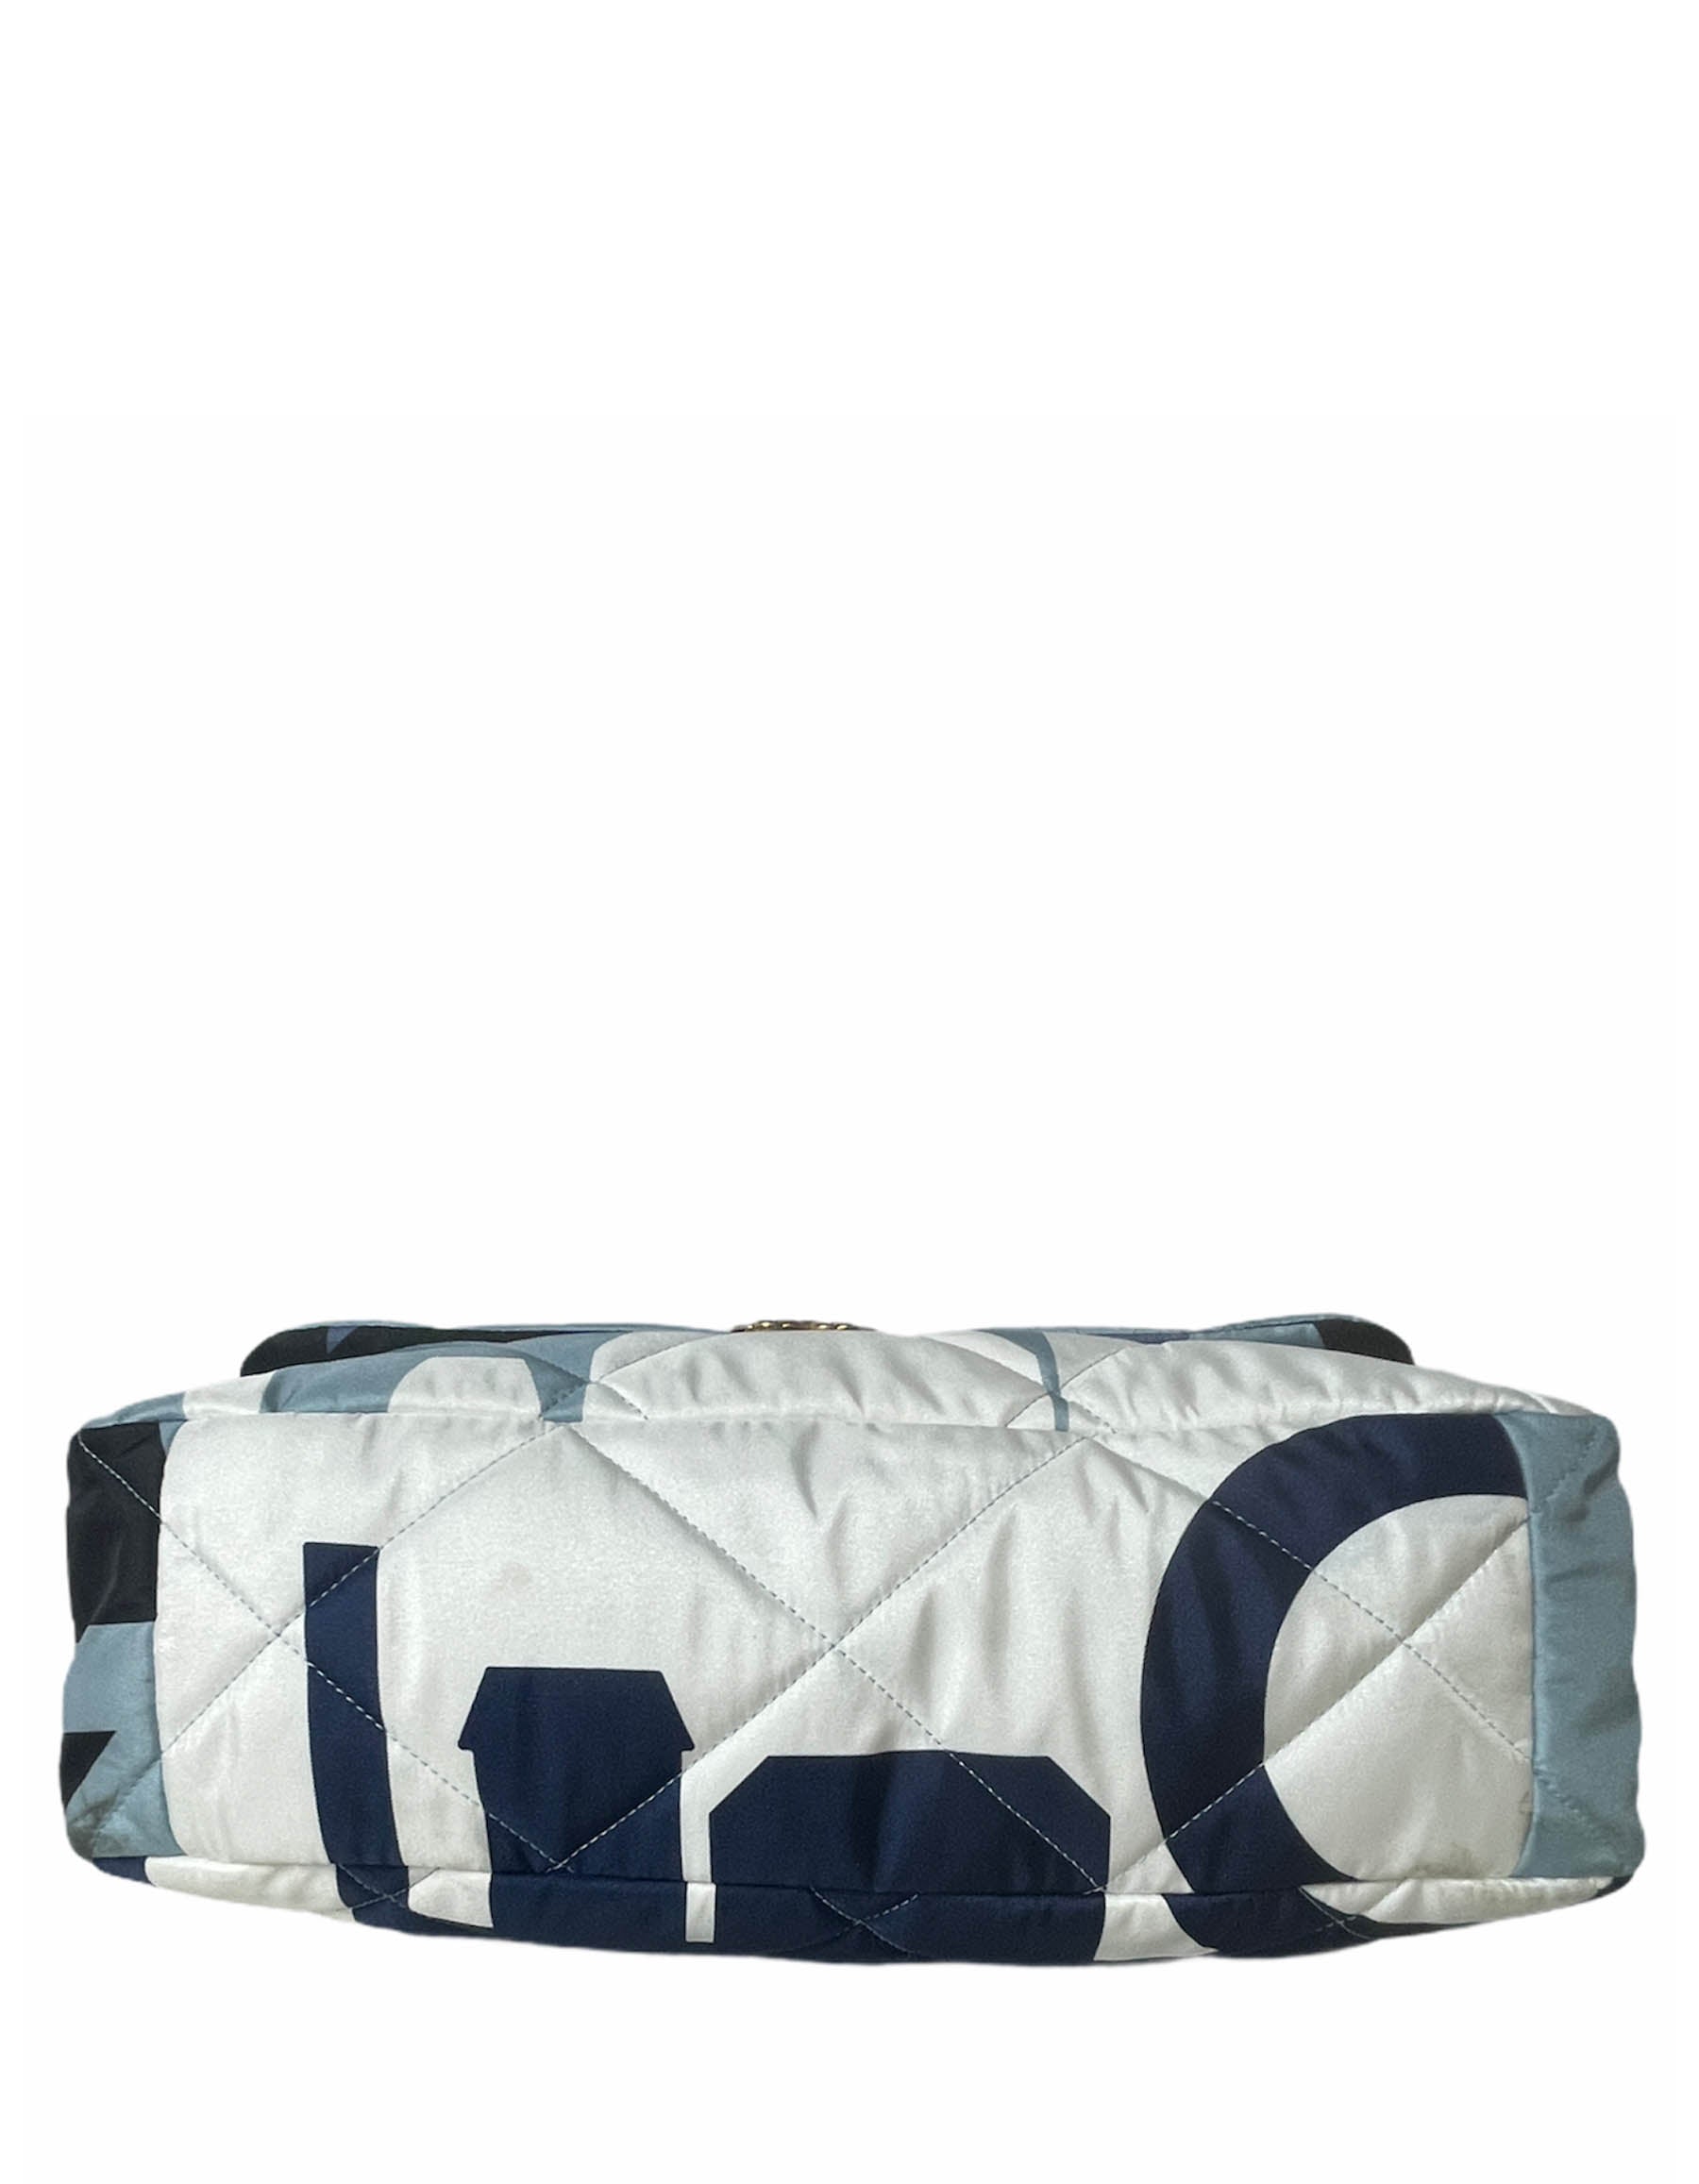 Chanel Blue/White/Black Maxi Scarf Chanel 19 Flap Bag